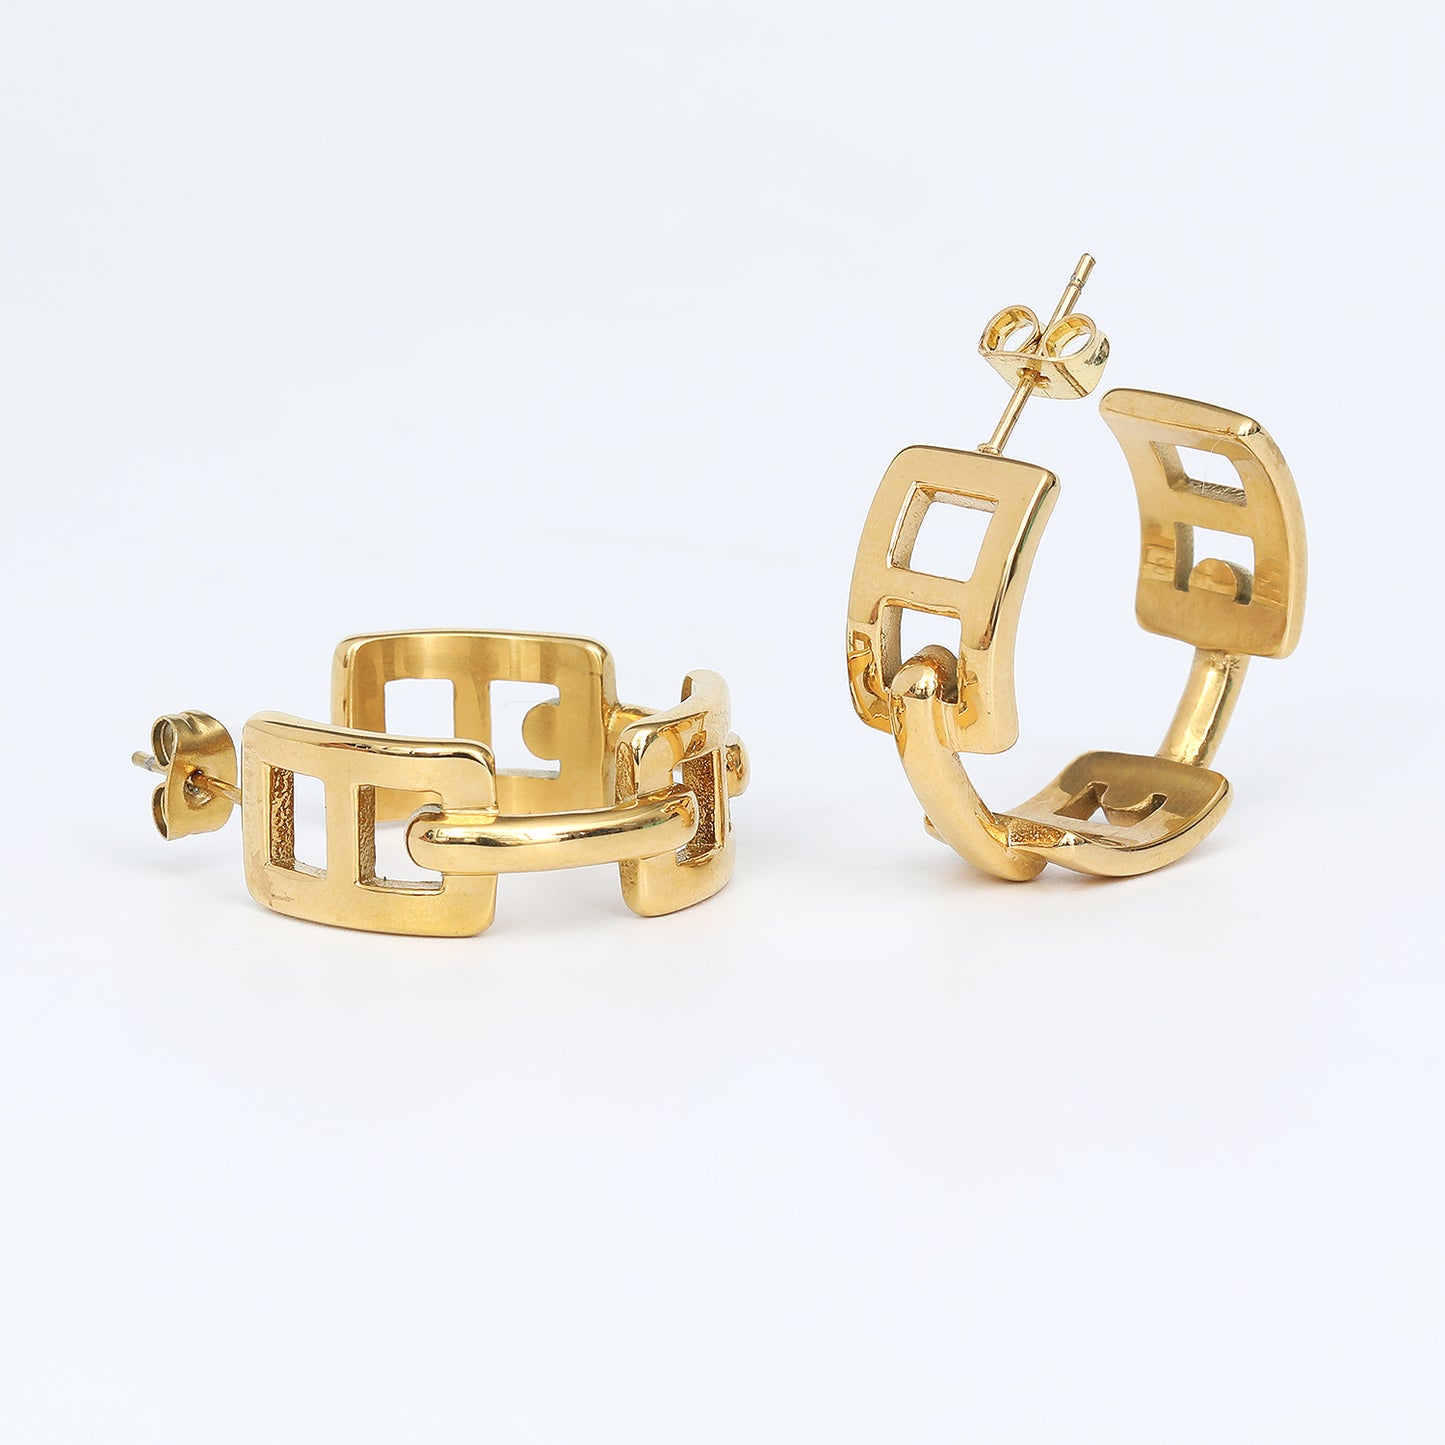 DLB Modernist Links: Geometric Gold-Tone Hoop Earrings